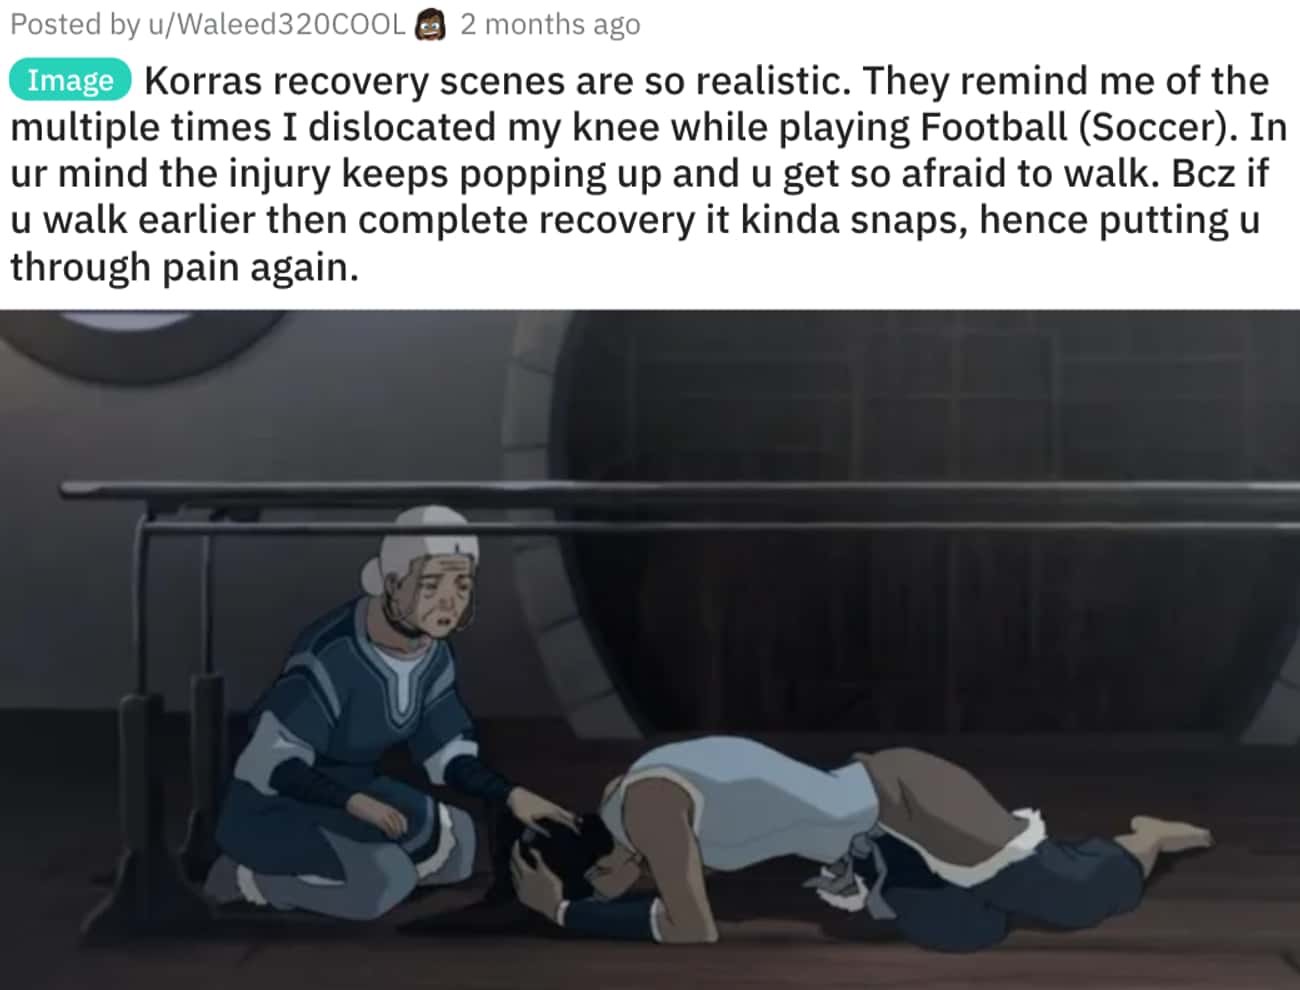 Korra's Recovery